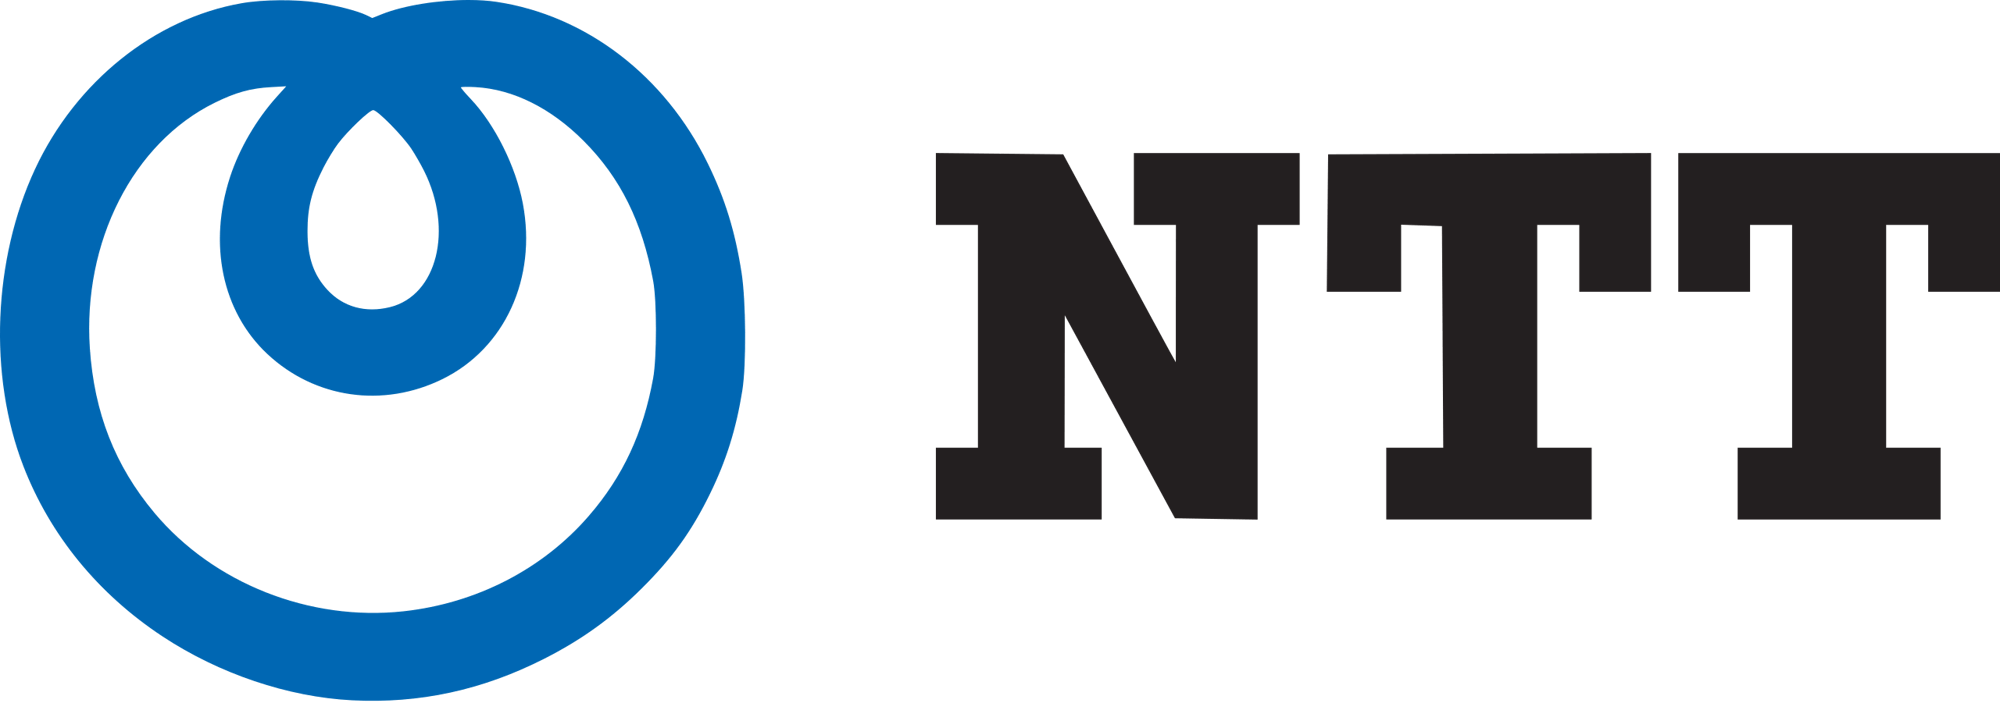 NTT_company_logo.svg